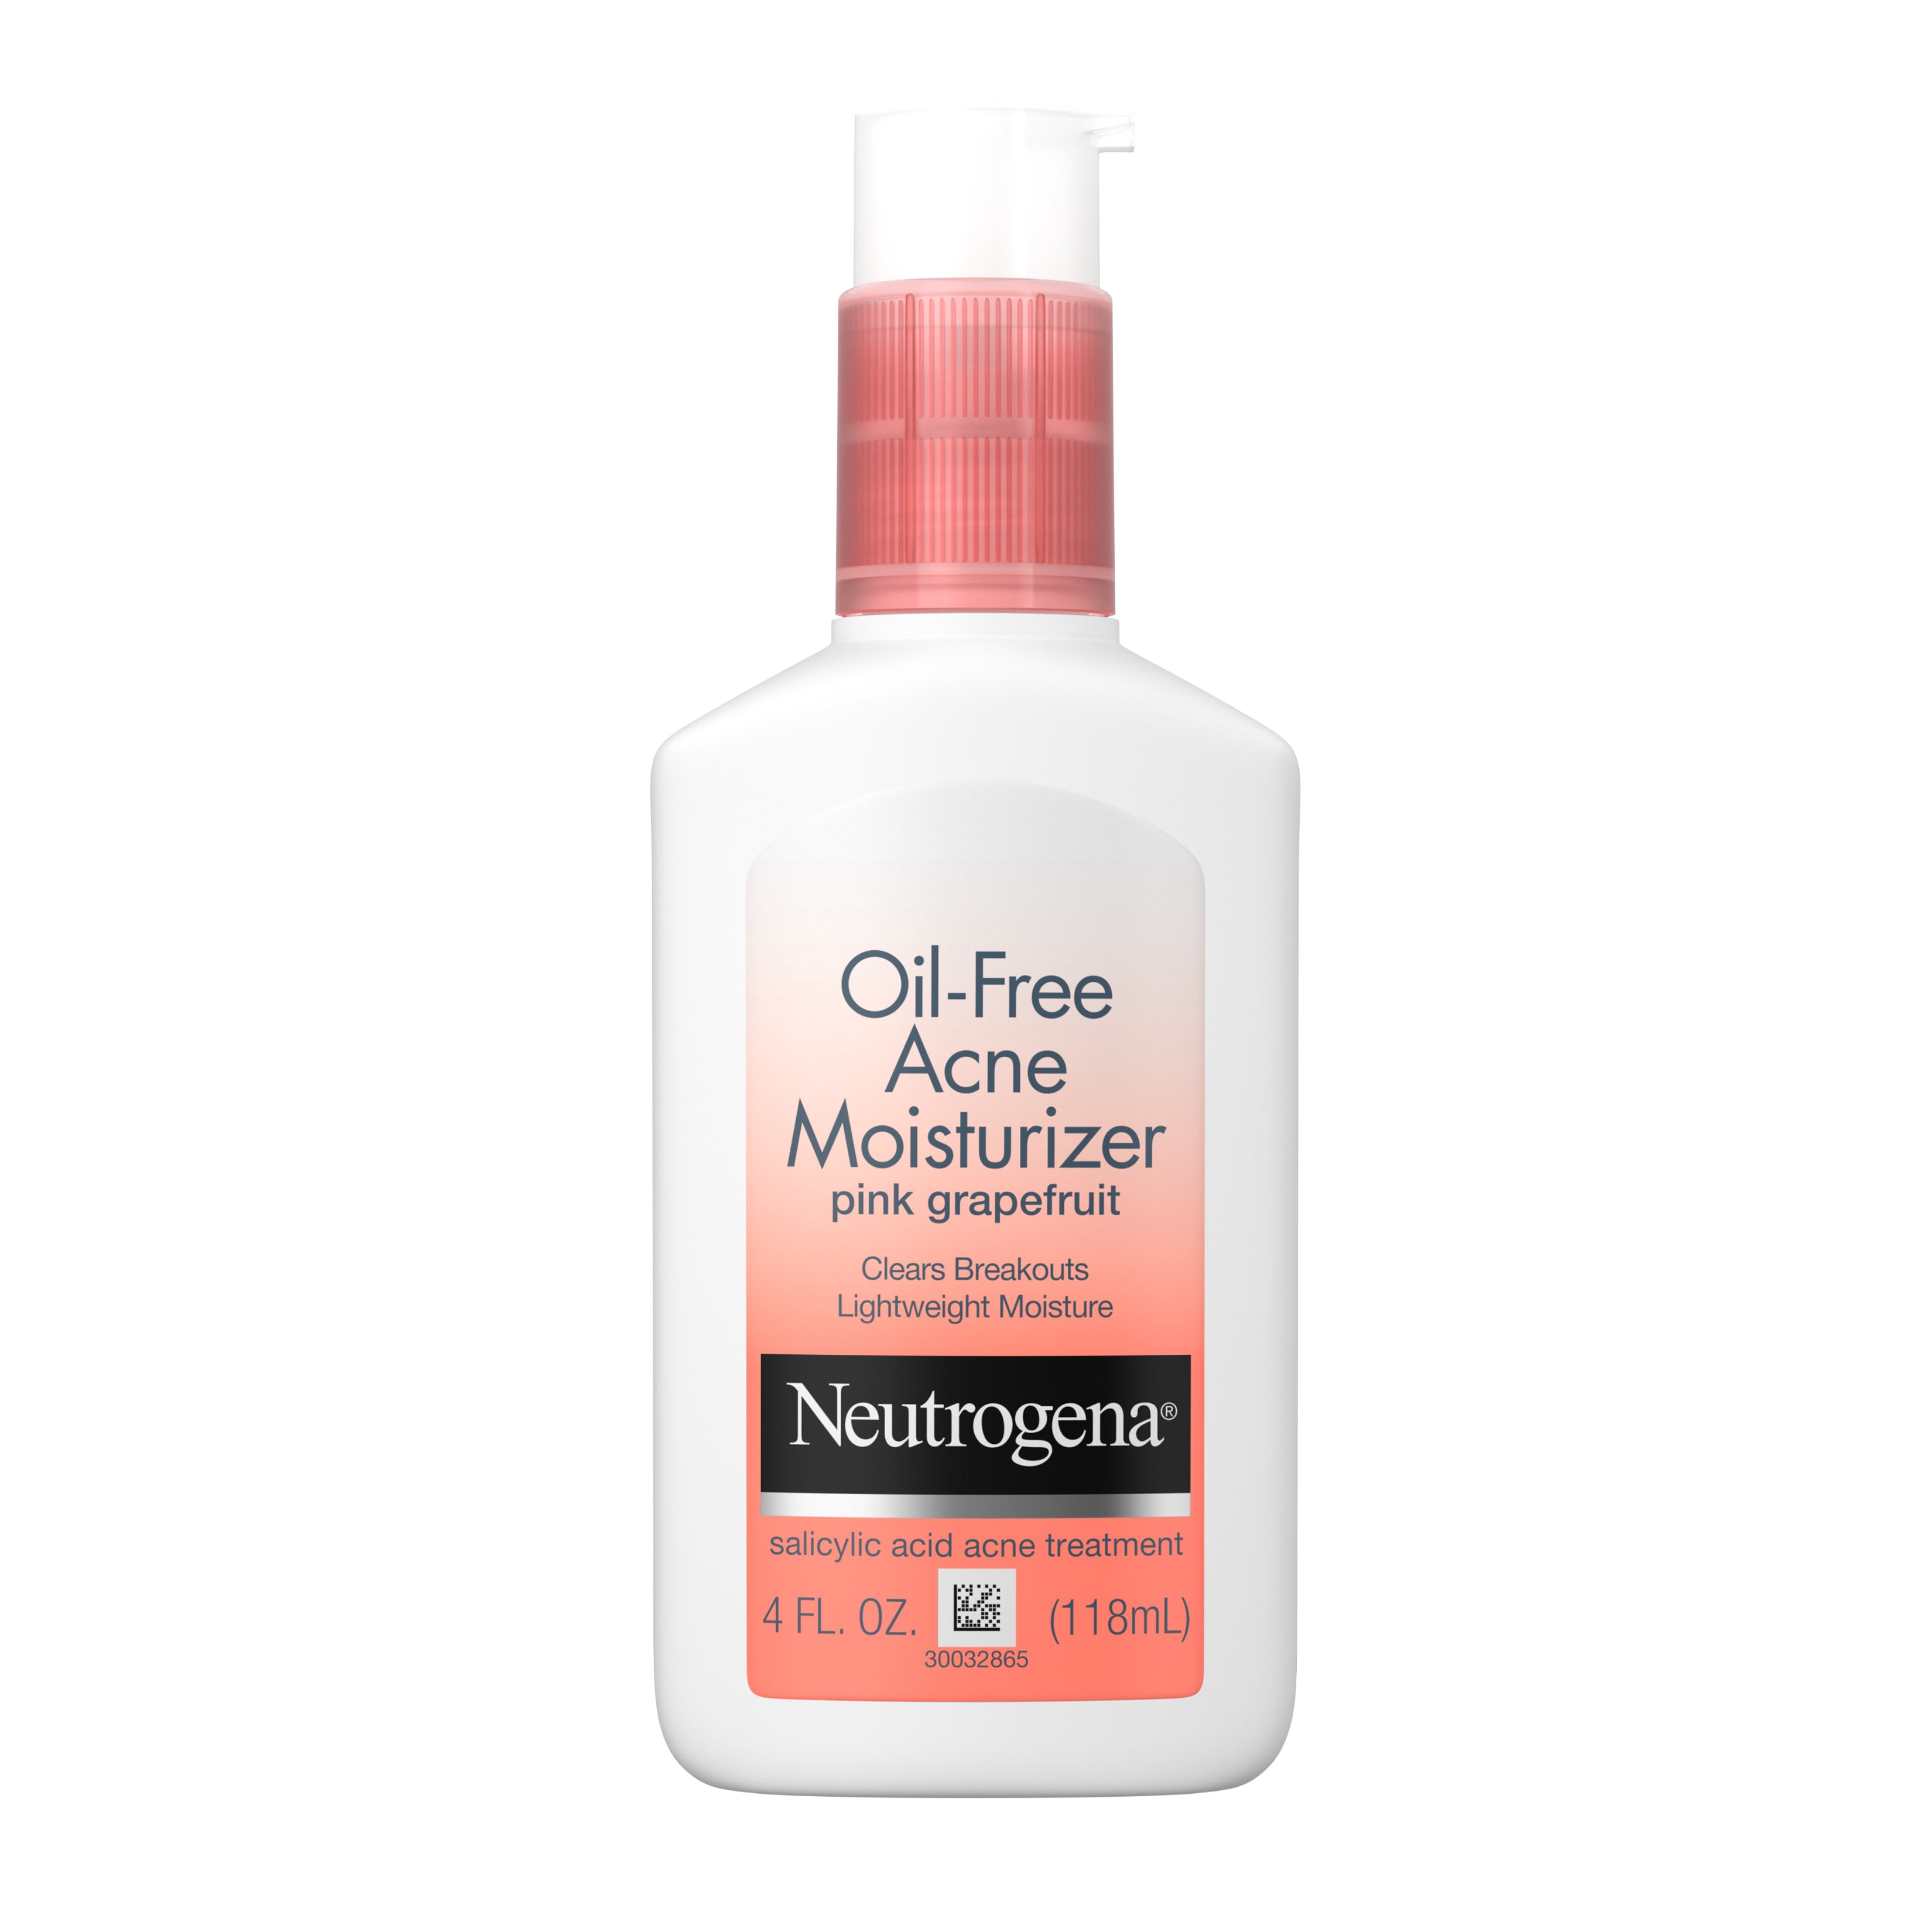 Neutrogena Oil-Free Acne Moisturizer, Pink Grapefruit 4 oz - image 1 of 19